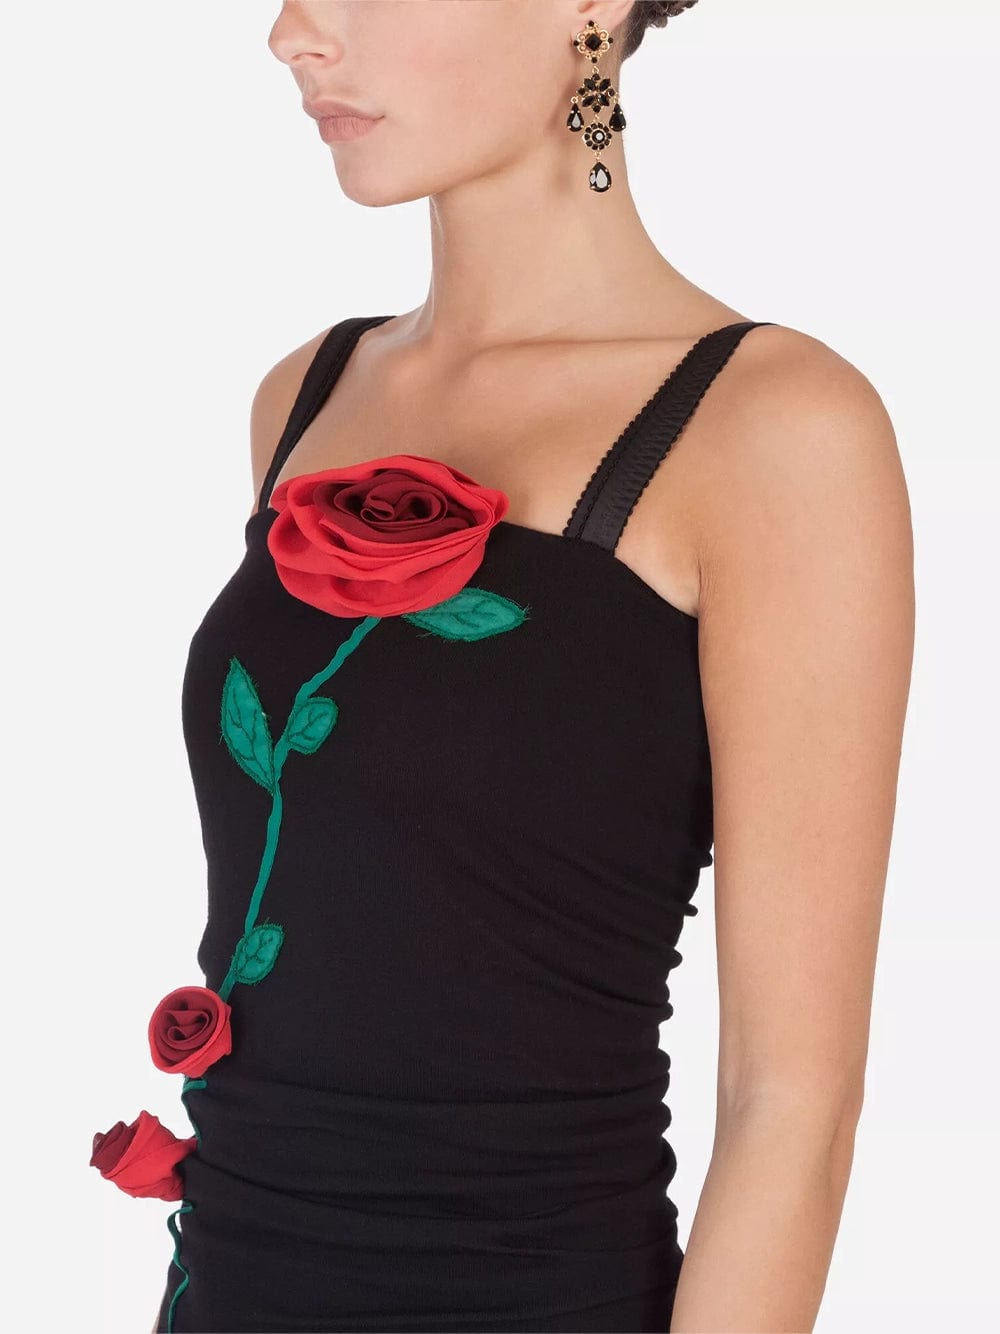 Dolce & Gabbana Rose Embroidery Sheath Dress